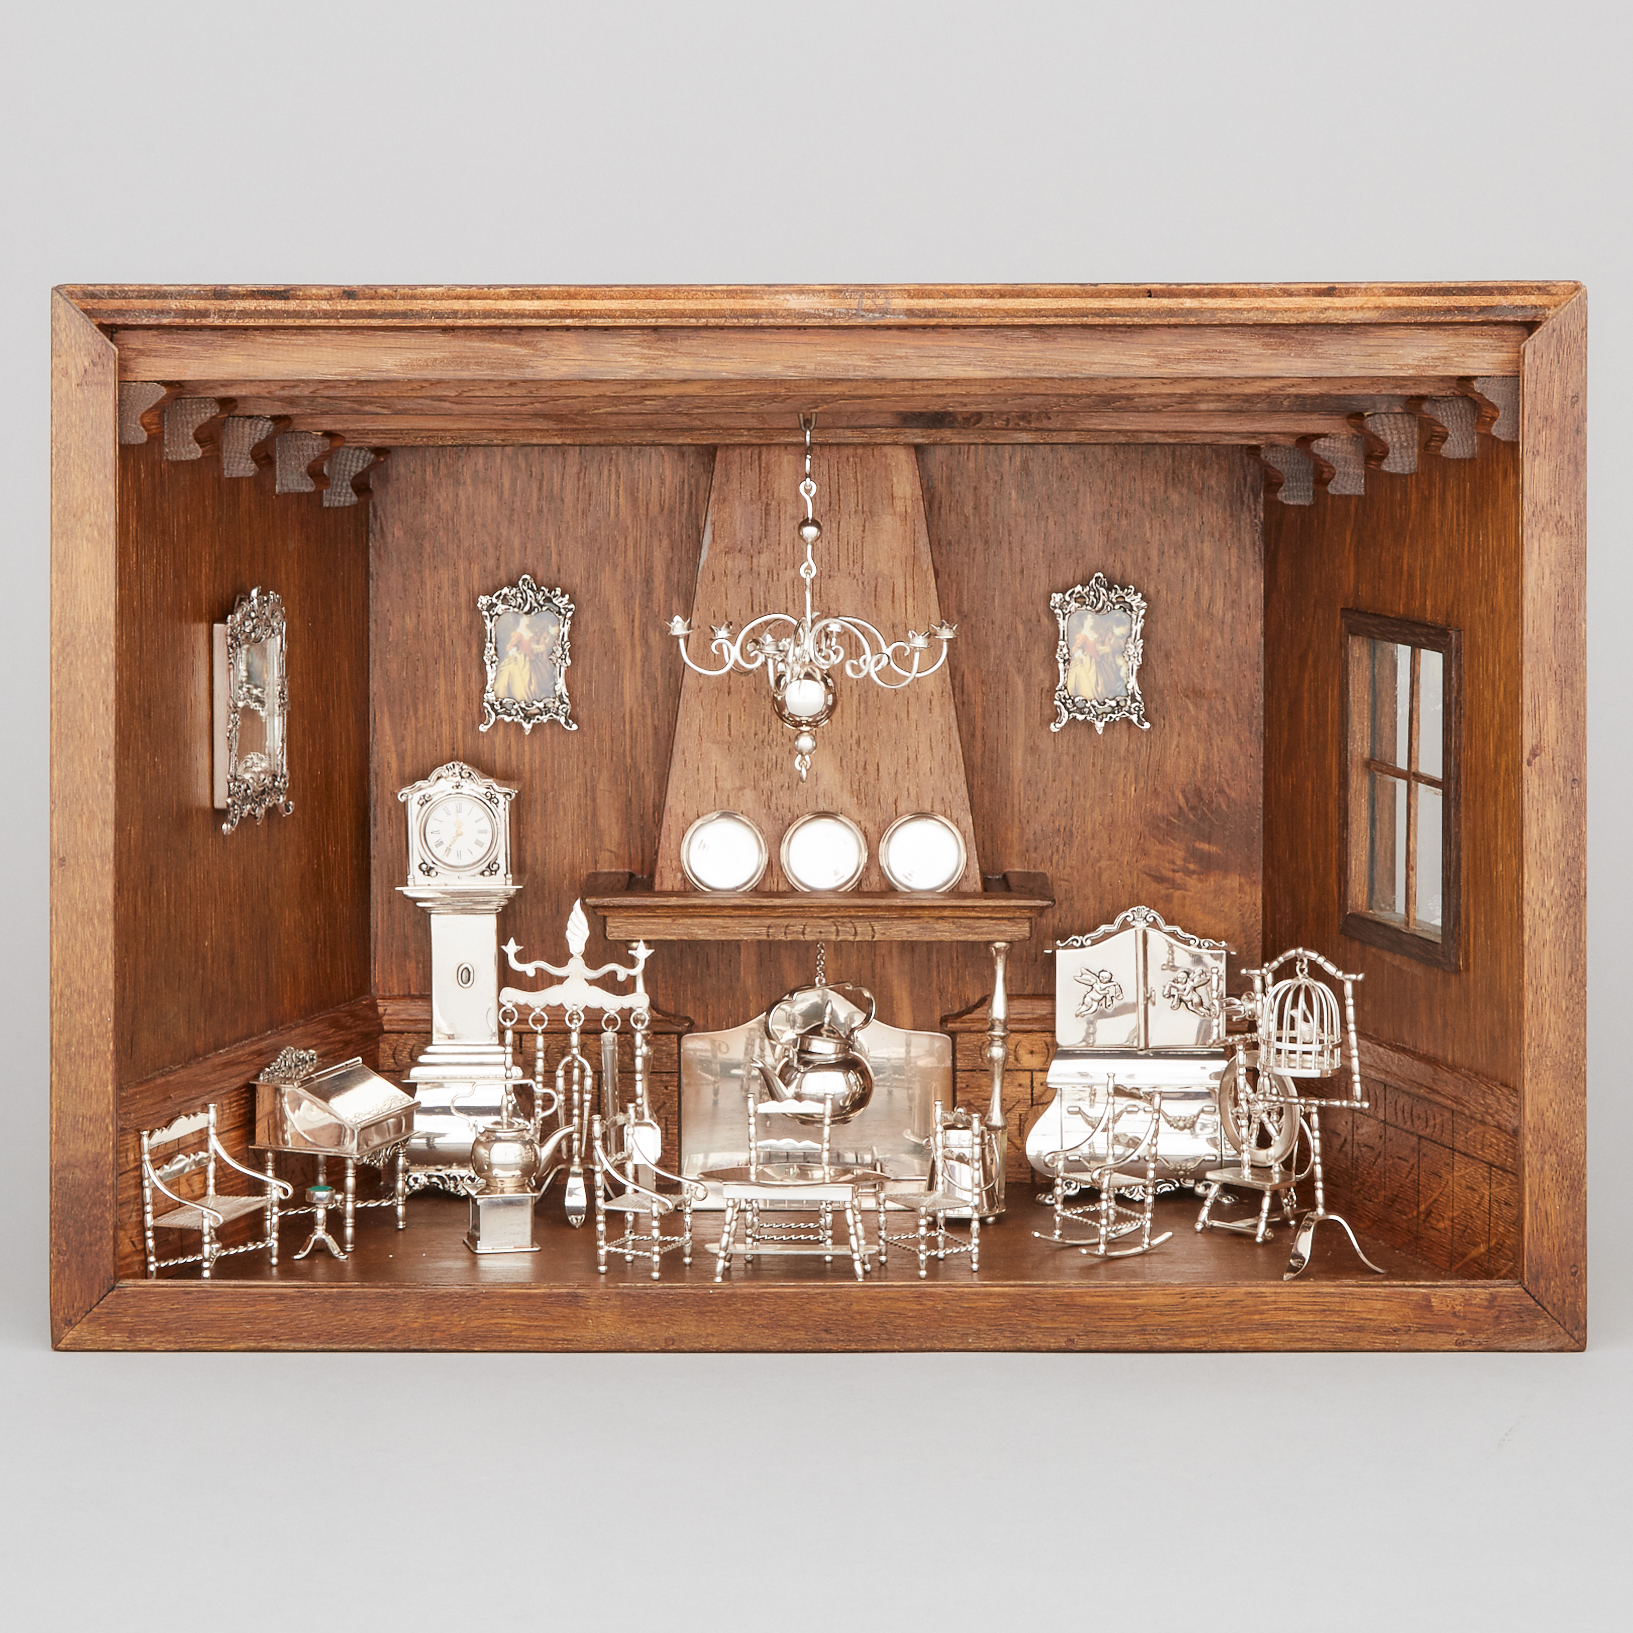 Dutch Silver Miniature Living Room Diorama, H. Hooijkaas, Schoonhoven, 20th century